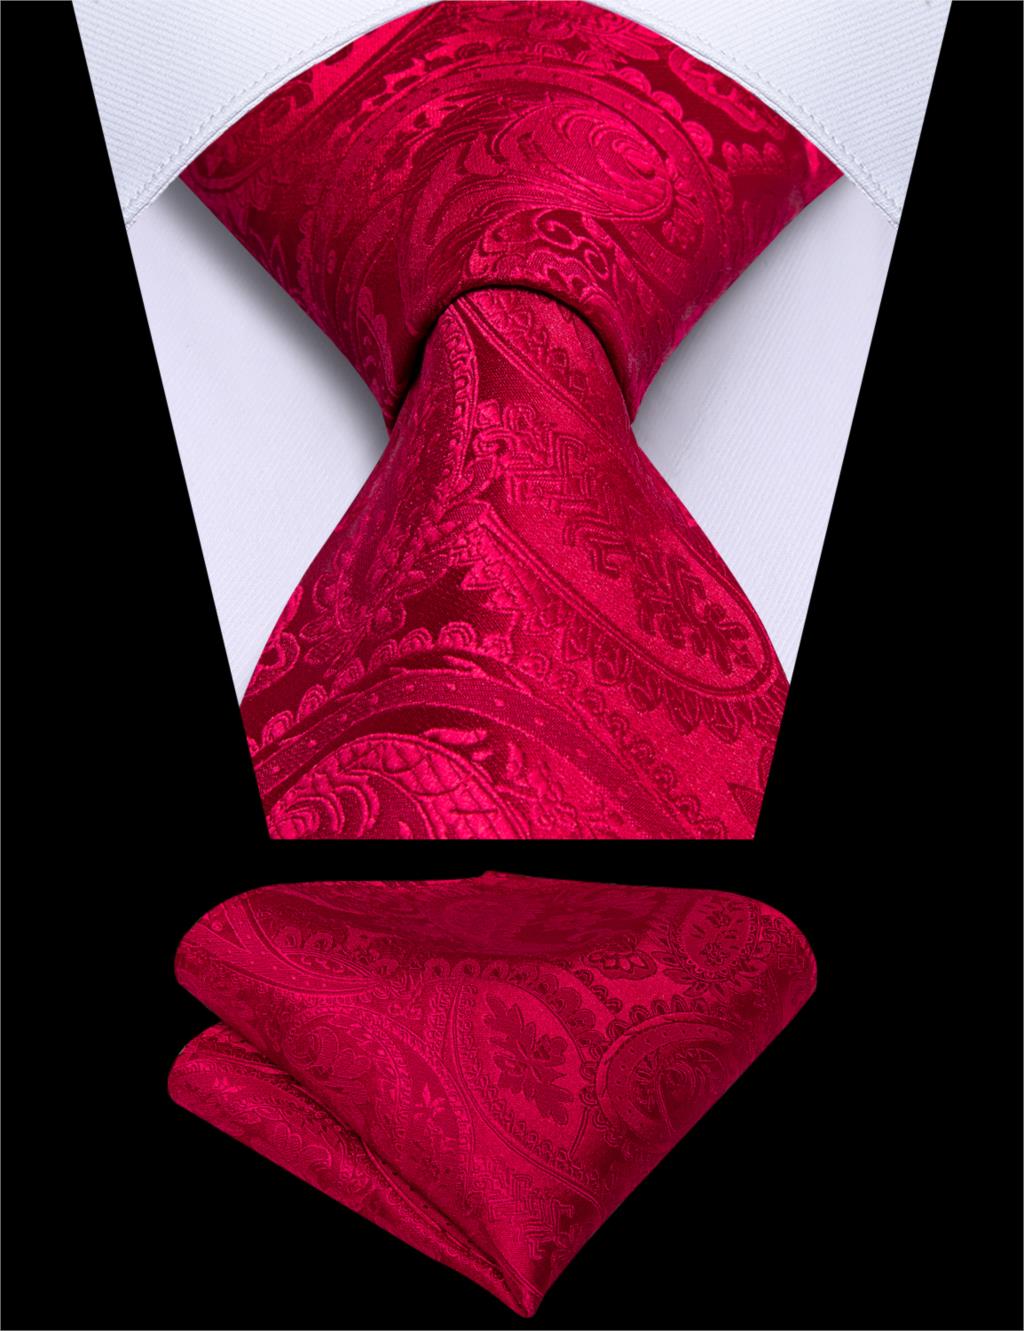 Mens Suit Vest Waistcoat Formal Wedding Groom Sleeveless Vest Hanky Necktie Set The Clothing Company Sydney